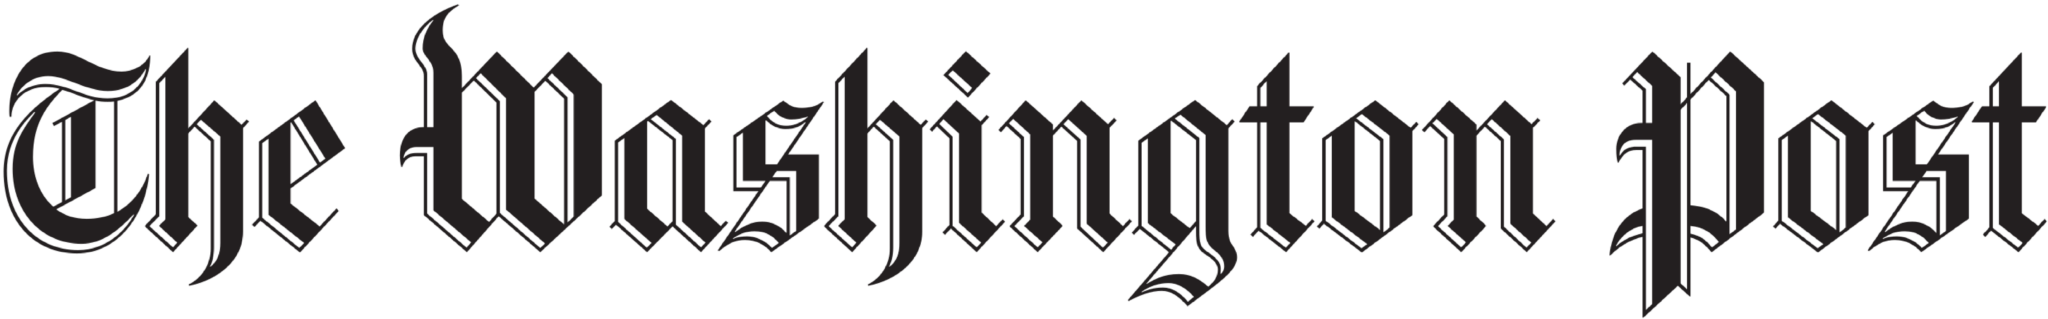 The_Logo_of_The_Washington_Post_Newspaper.svg